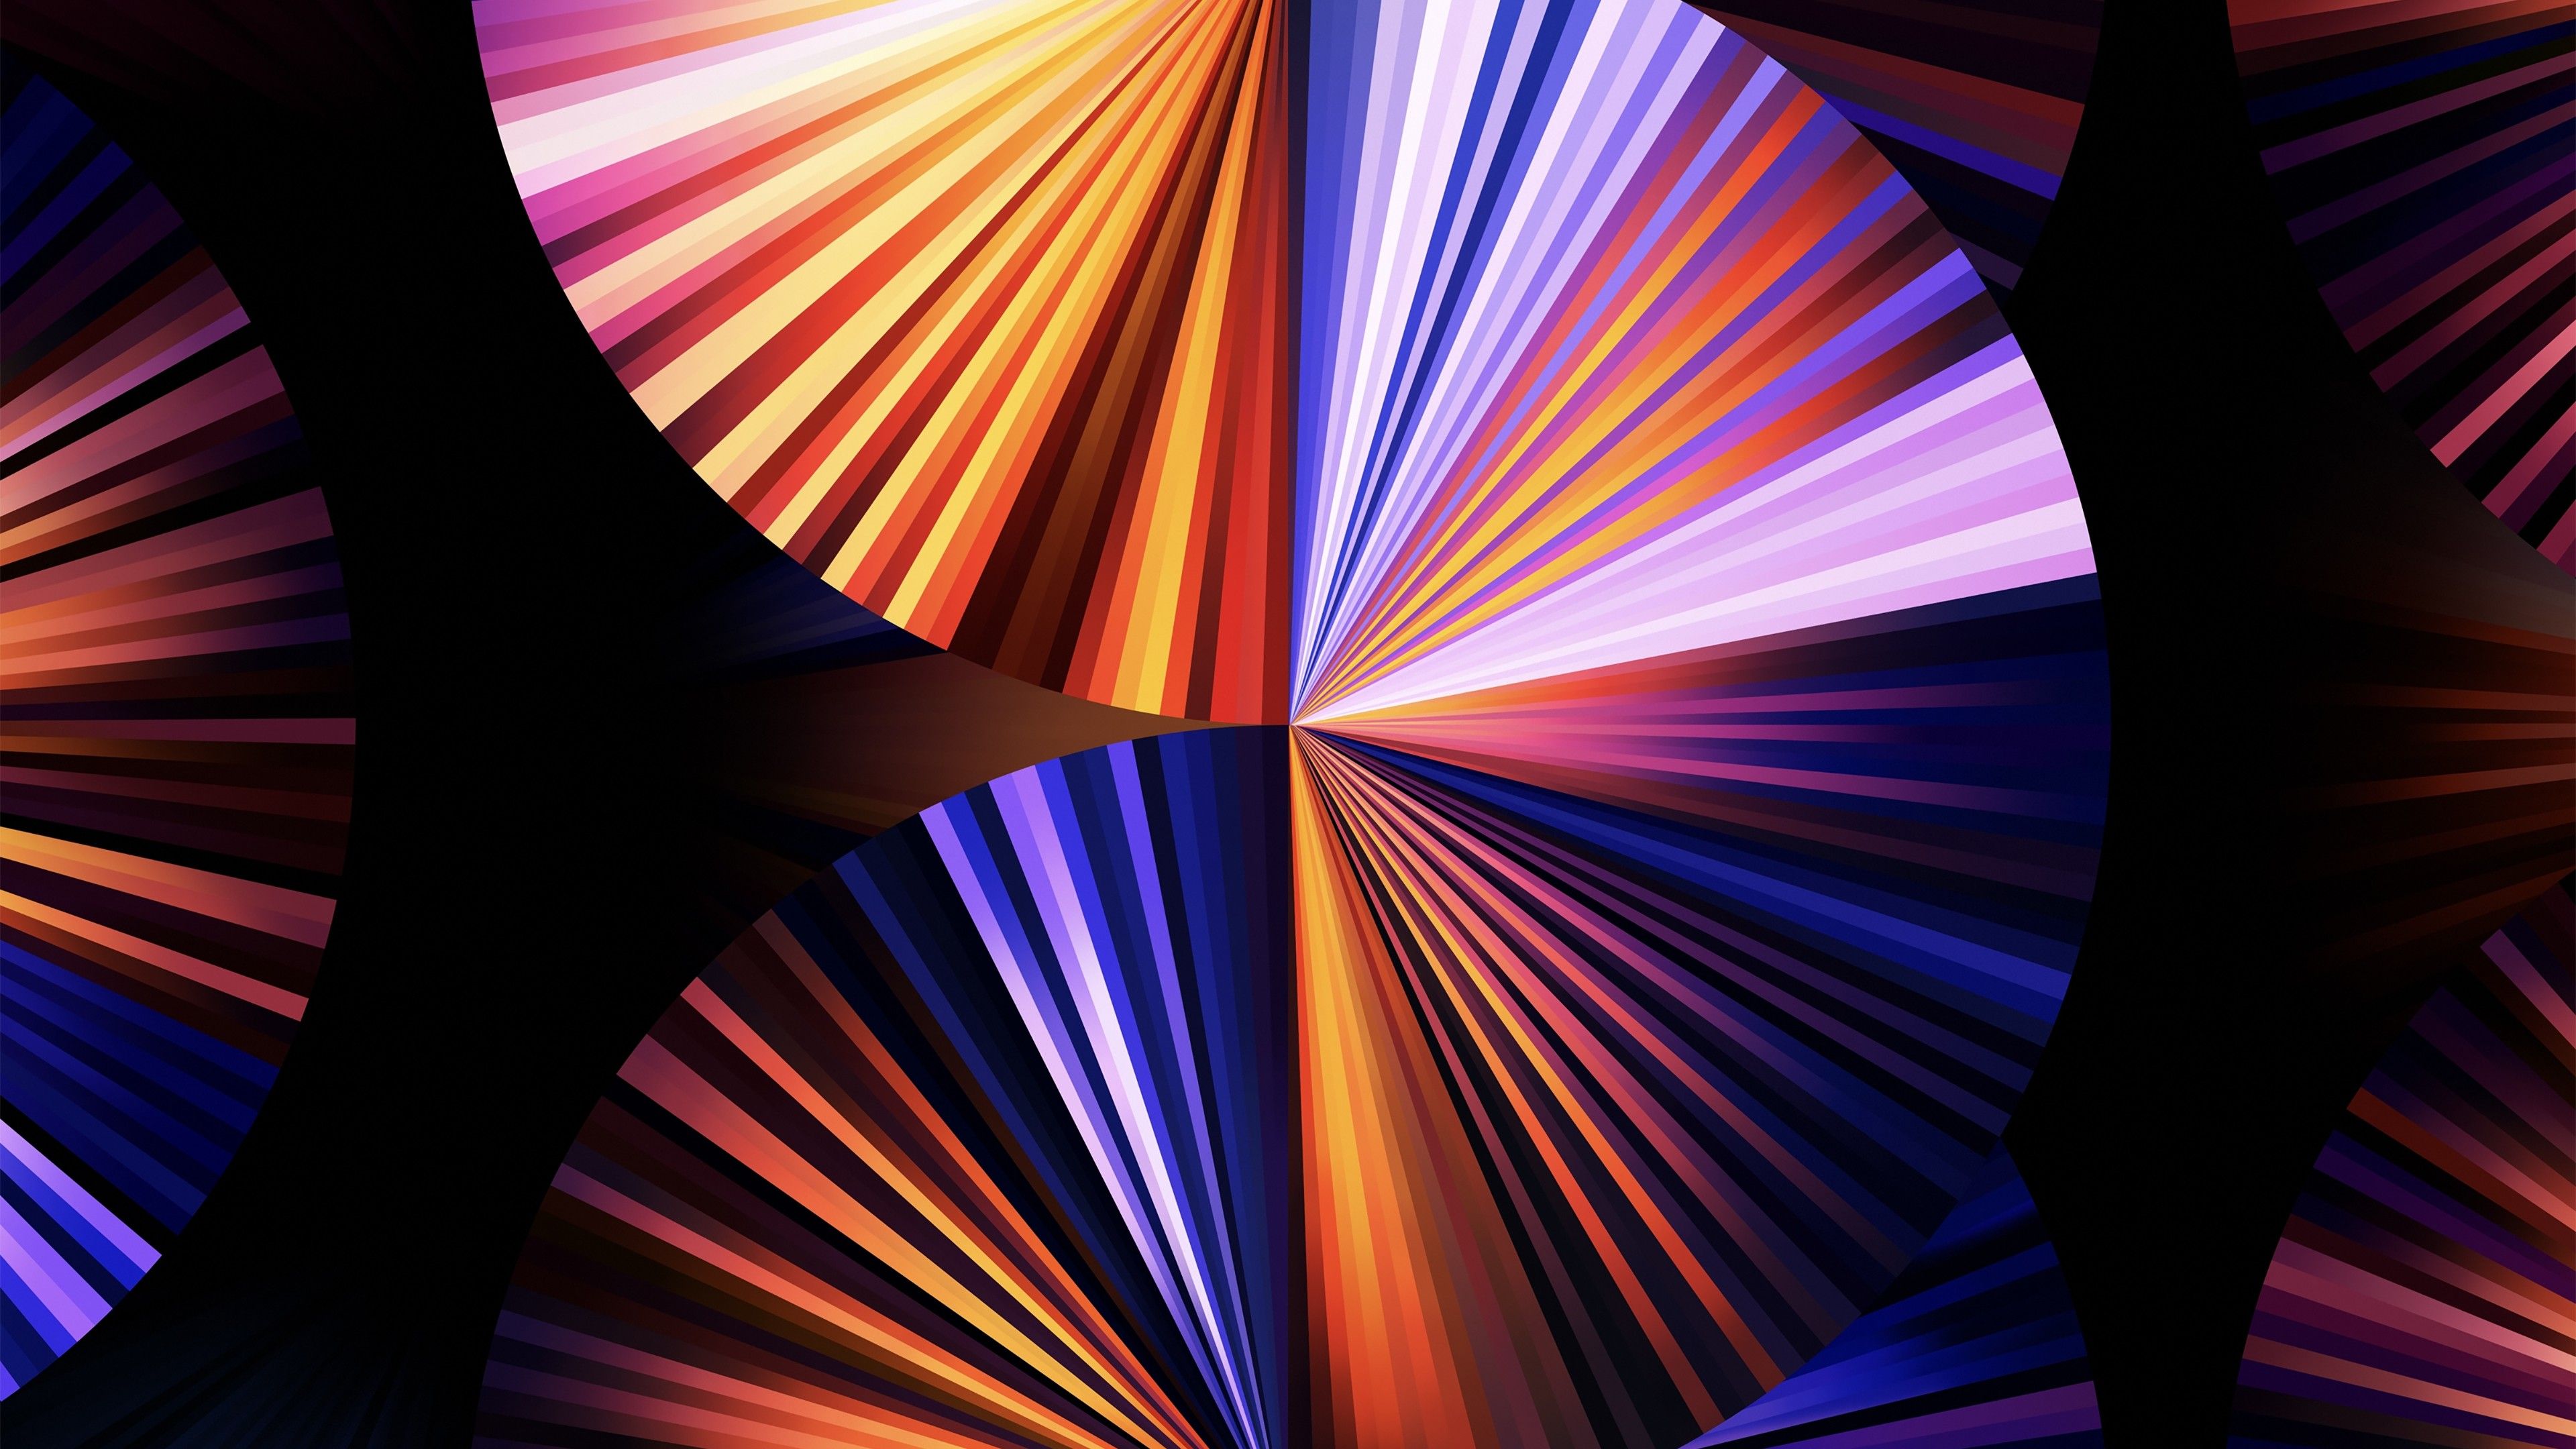 iPad Pro 2021 4K Wallpaper, Apple Event Purple, Light, Colorful, Stock, Multicolor, Abstract